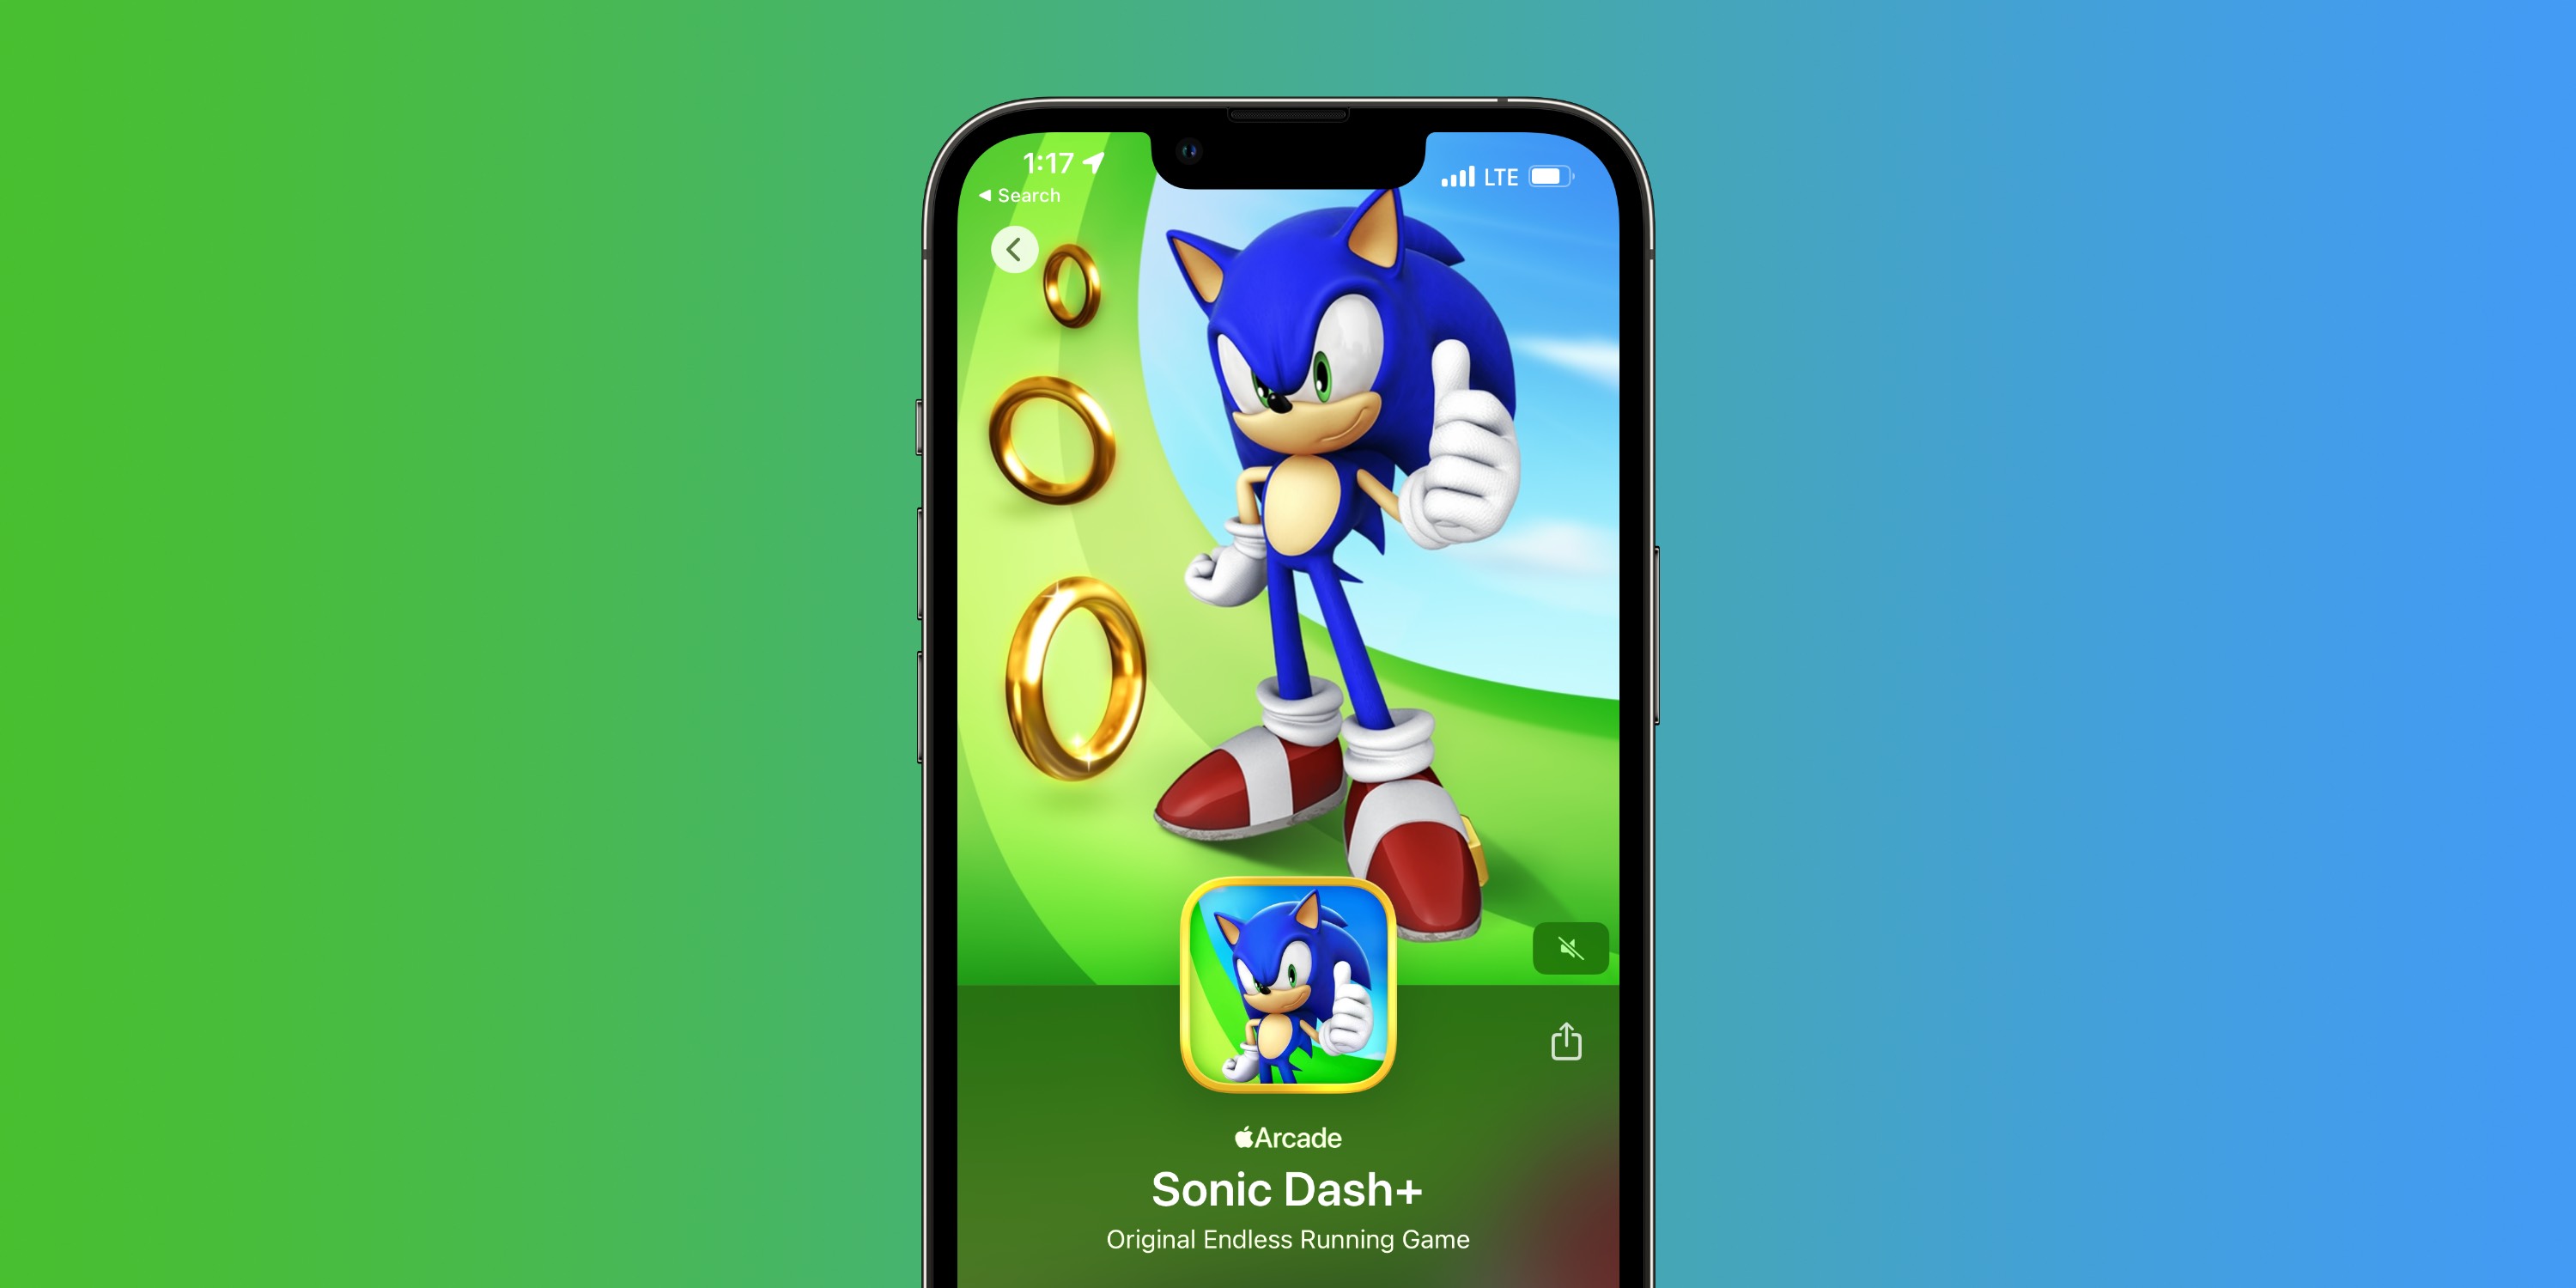 Sonic Dash 2: Sonic Boom - Apps on Google Play